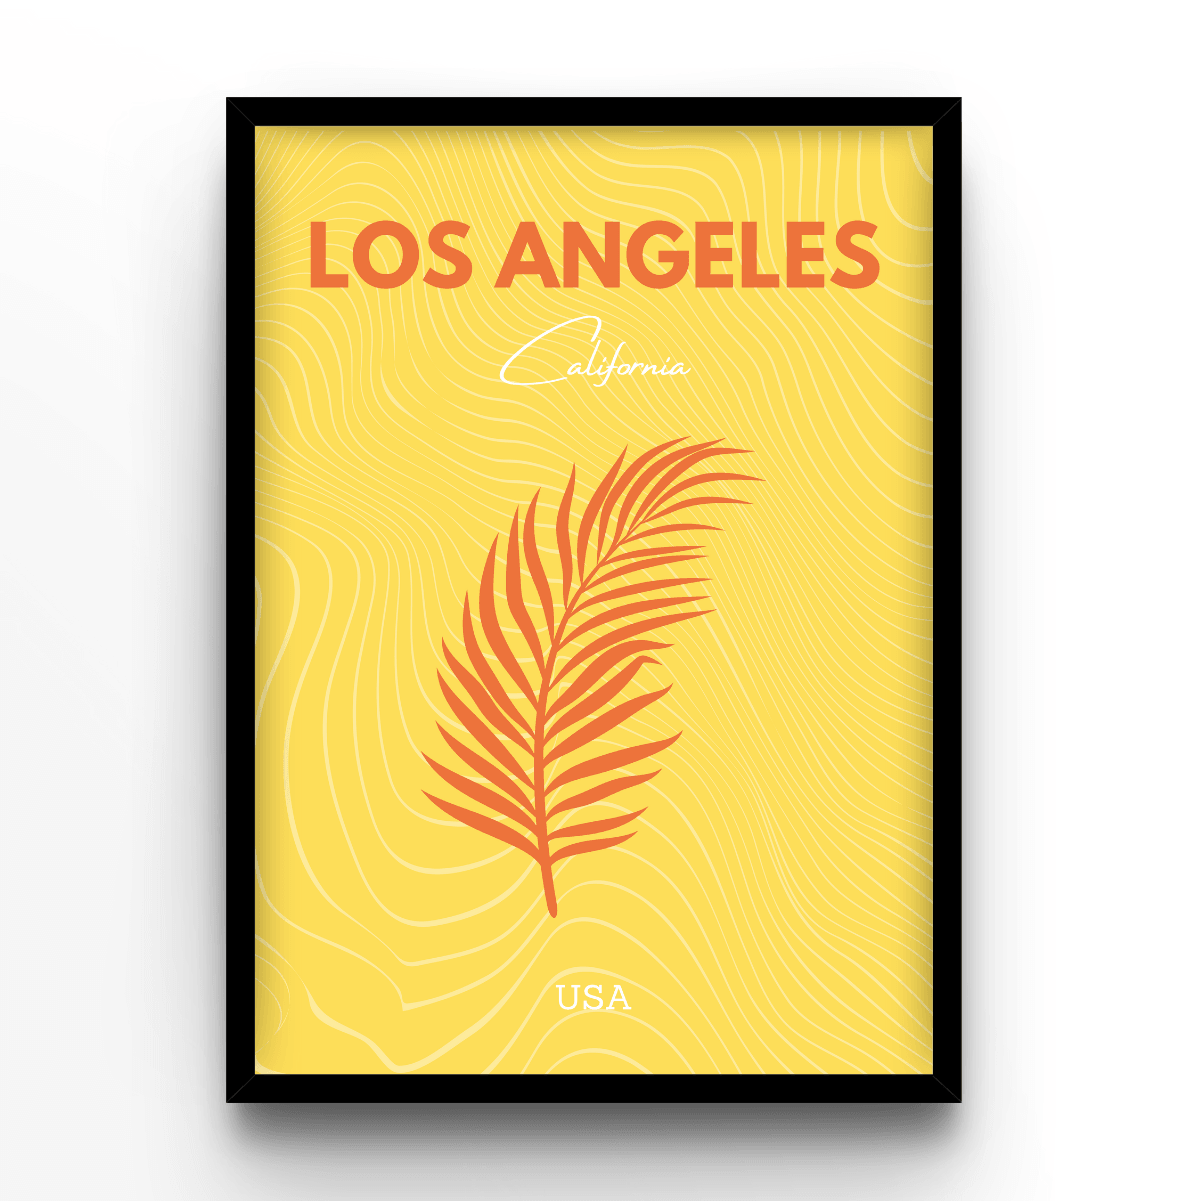 Los Angeles - A4, A3, A2 Posters Base - Poster Print Shop / Art Prints / PostersBase